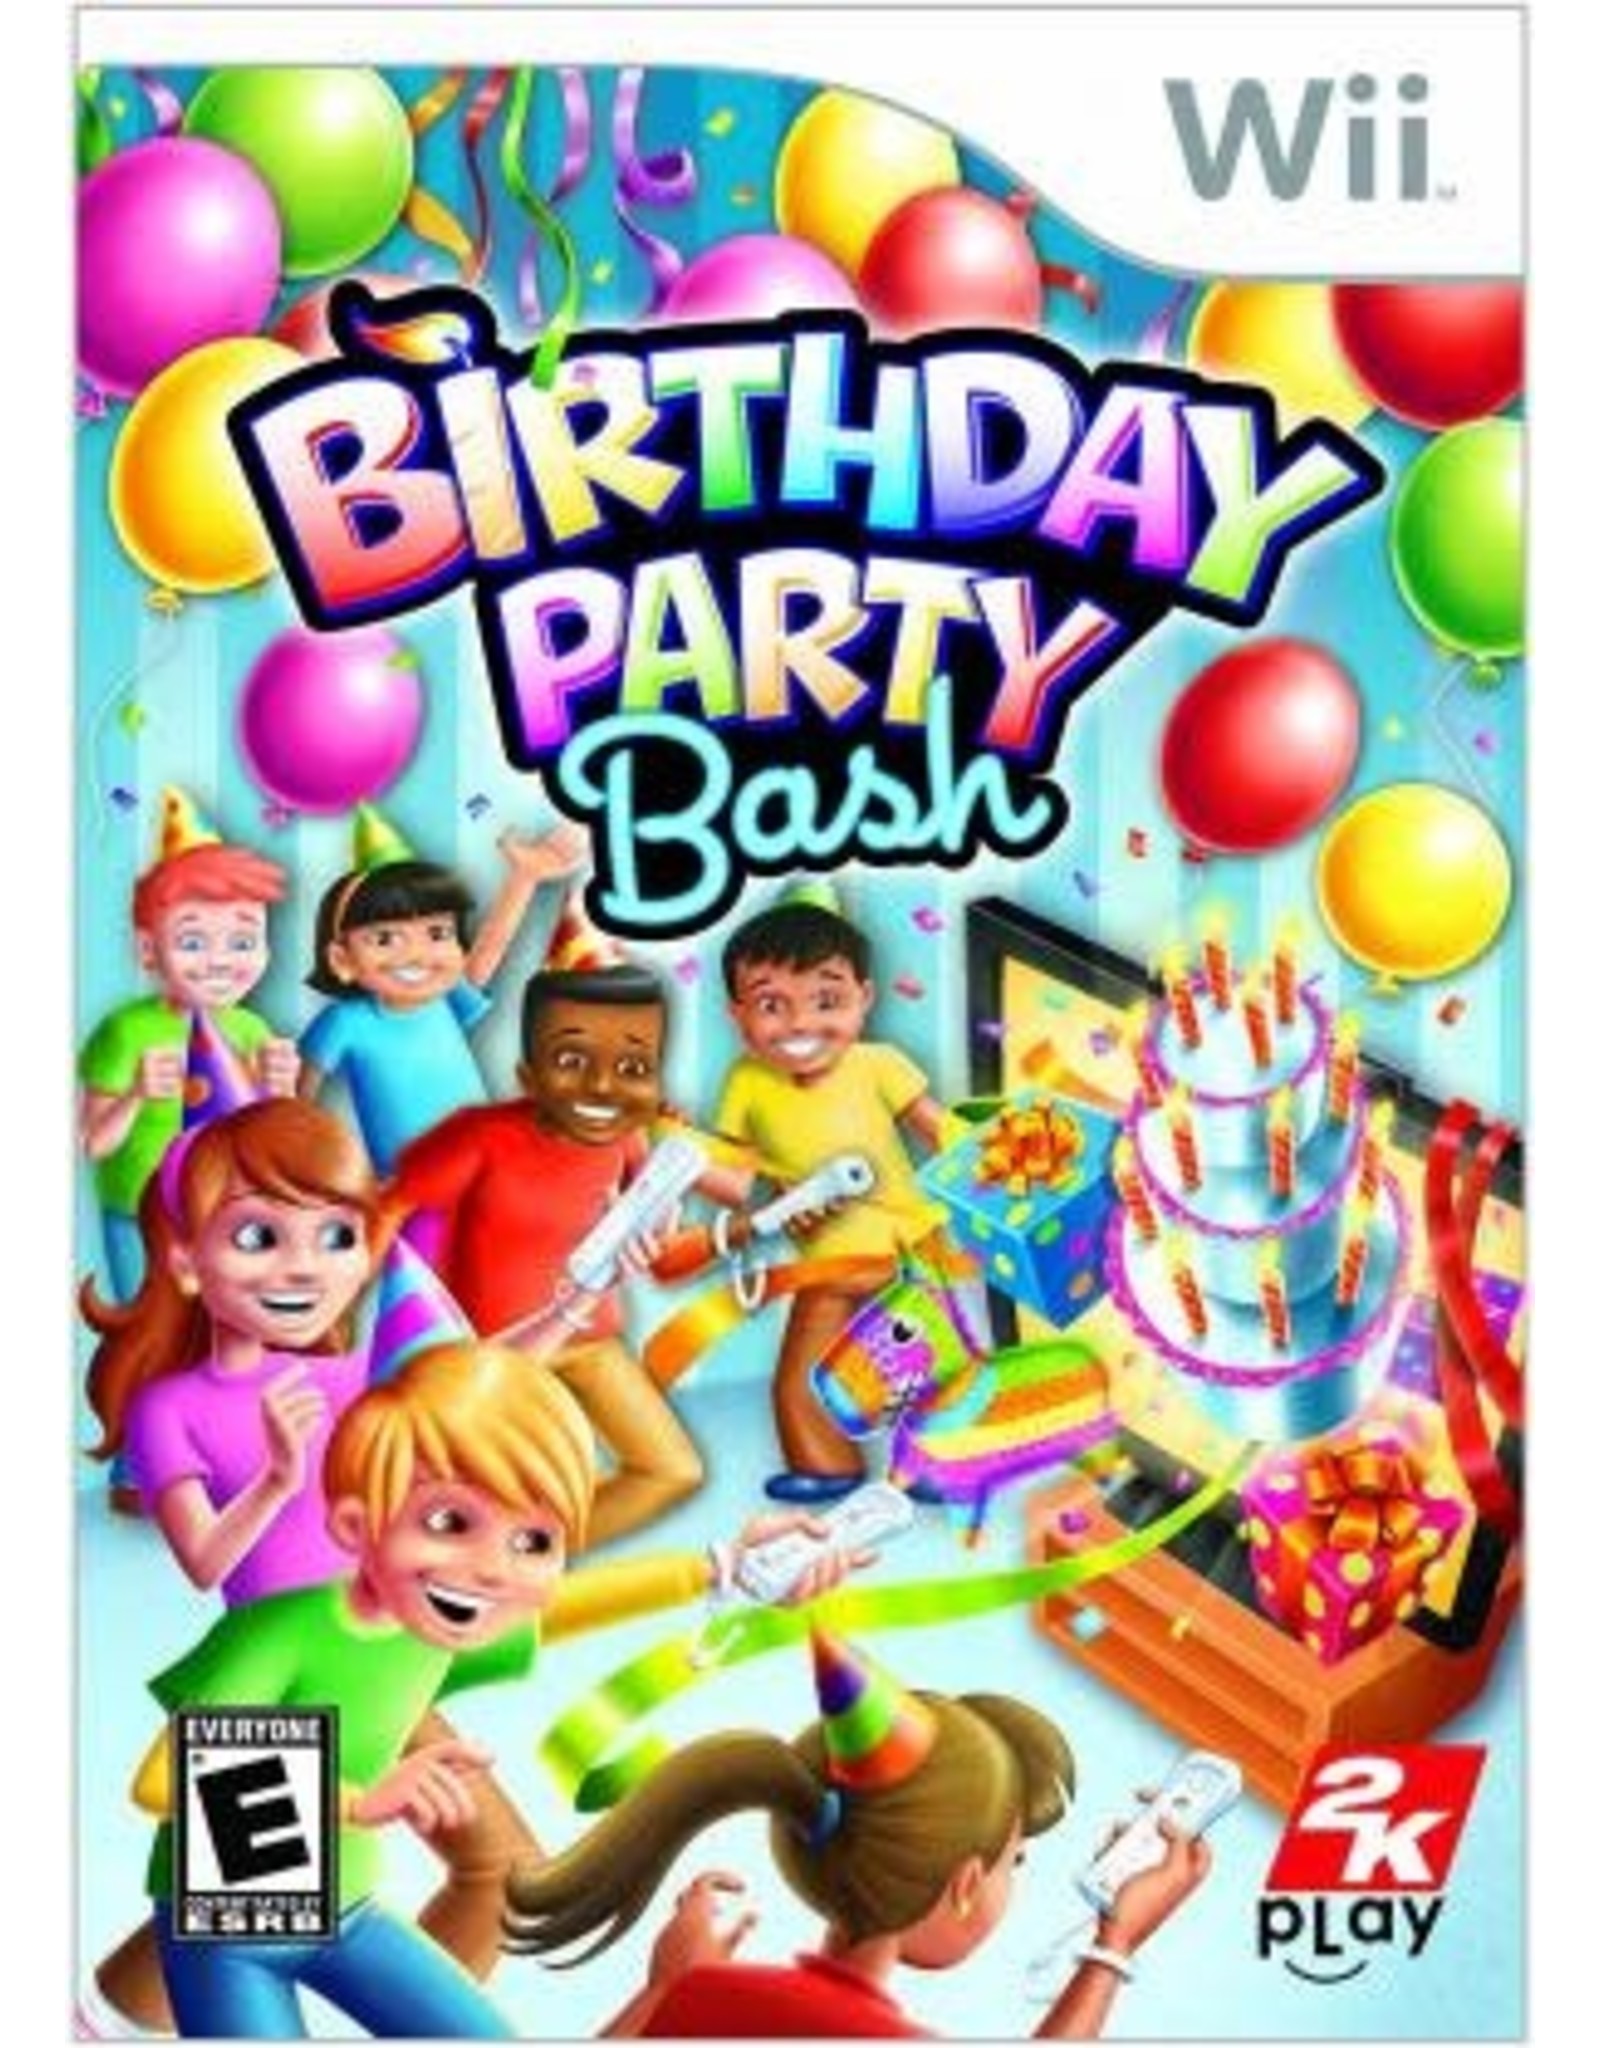 Wii Birthday Party Bash (CiB)